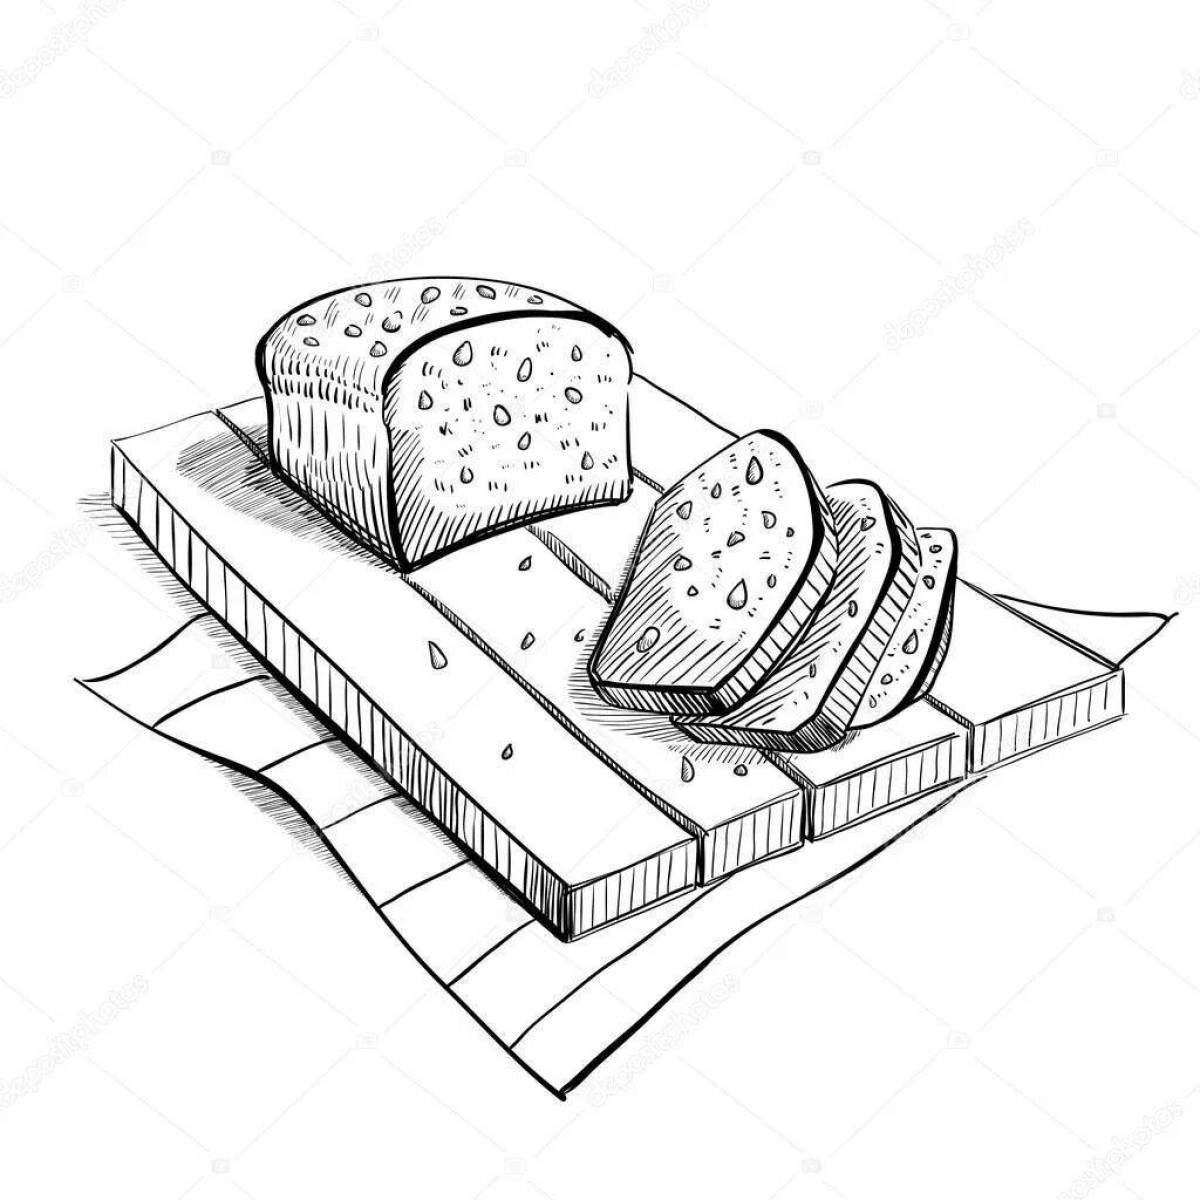 Blockade bread for 1st grade children #2